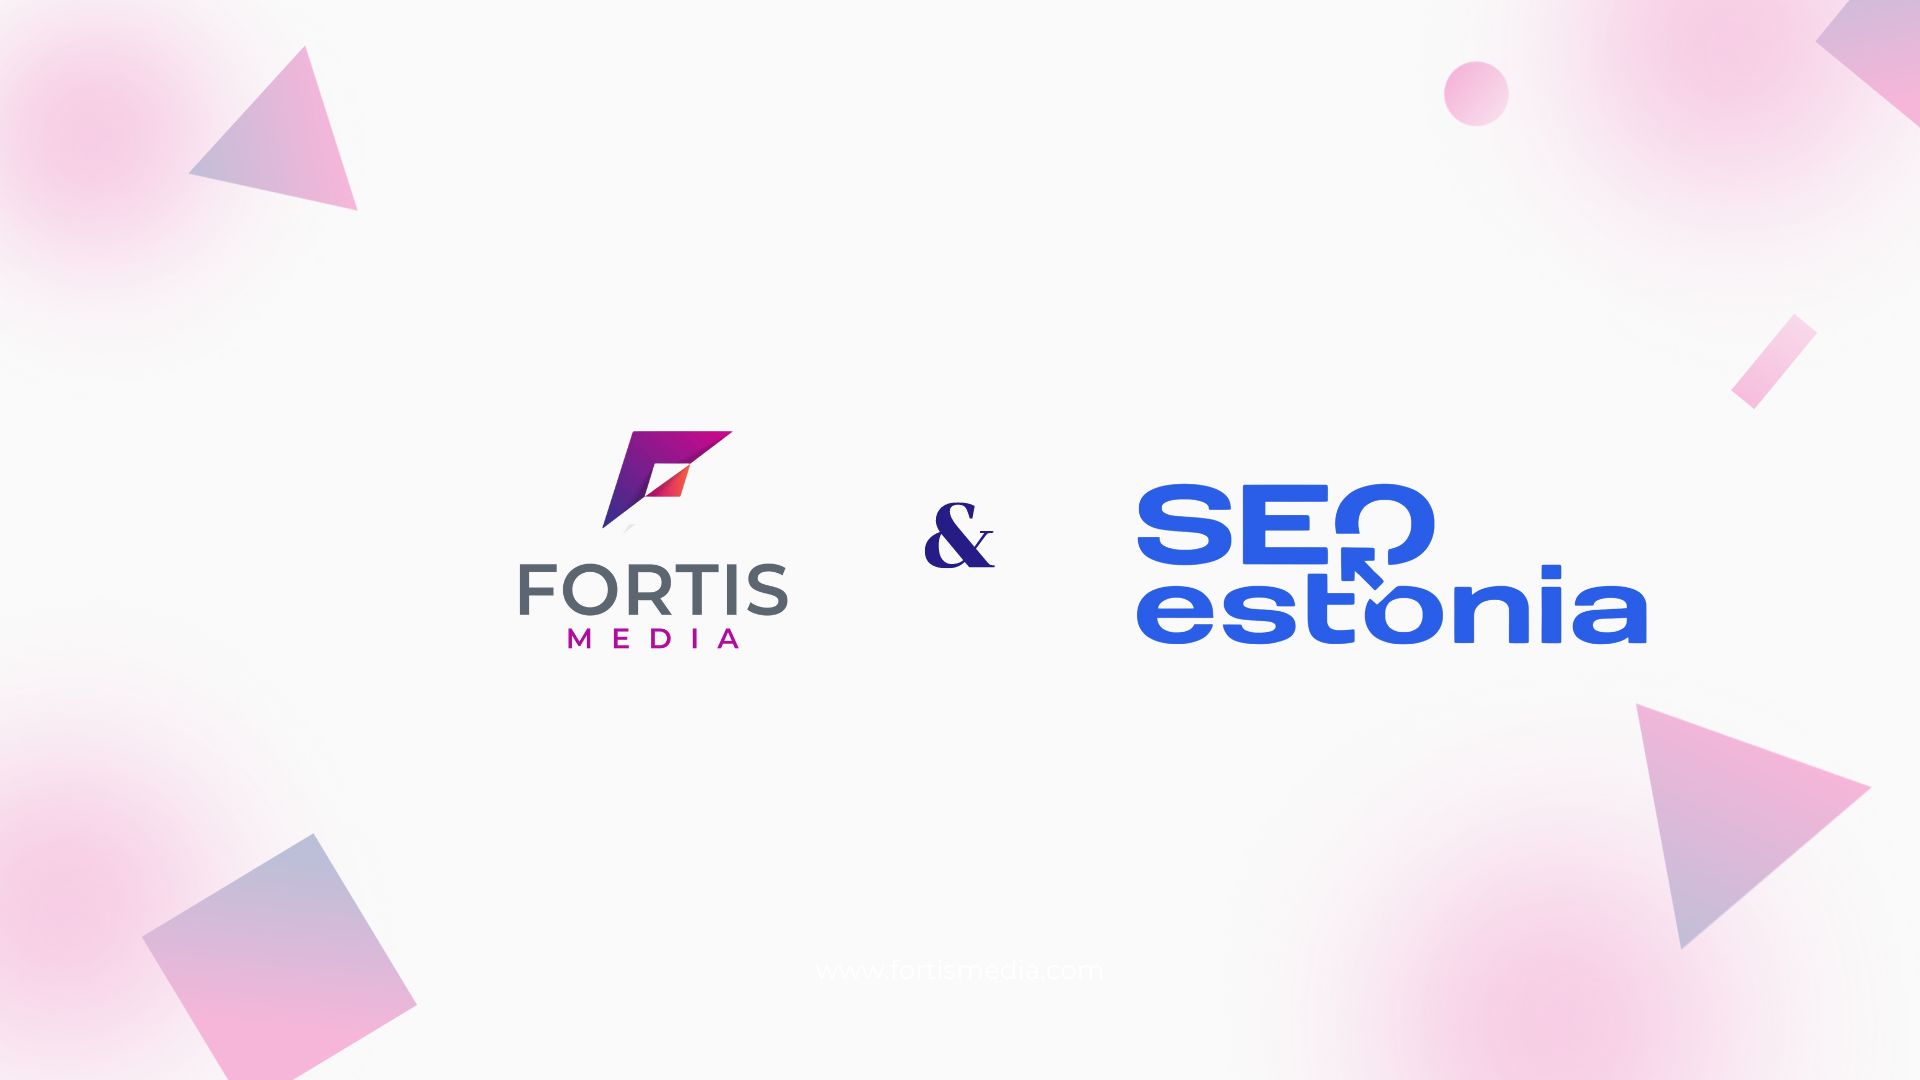 SEO Estonia and Fortis Media